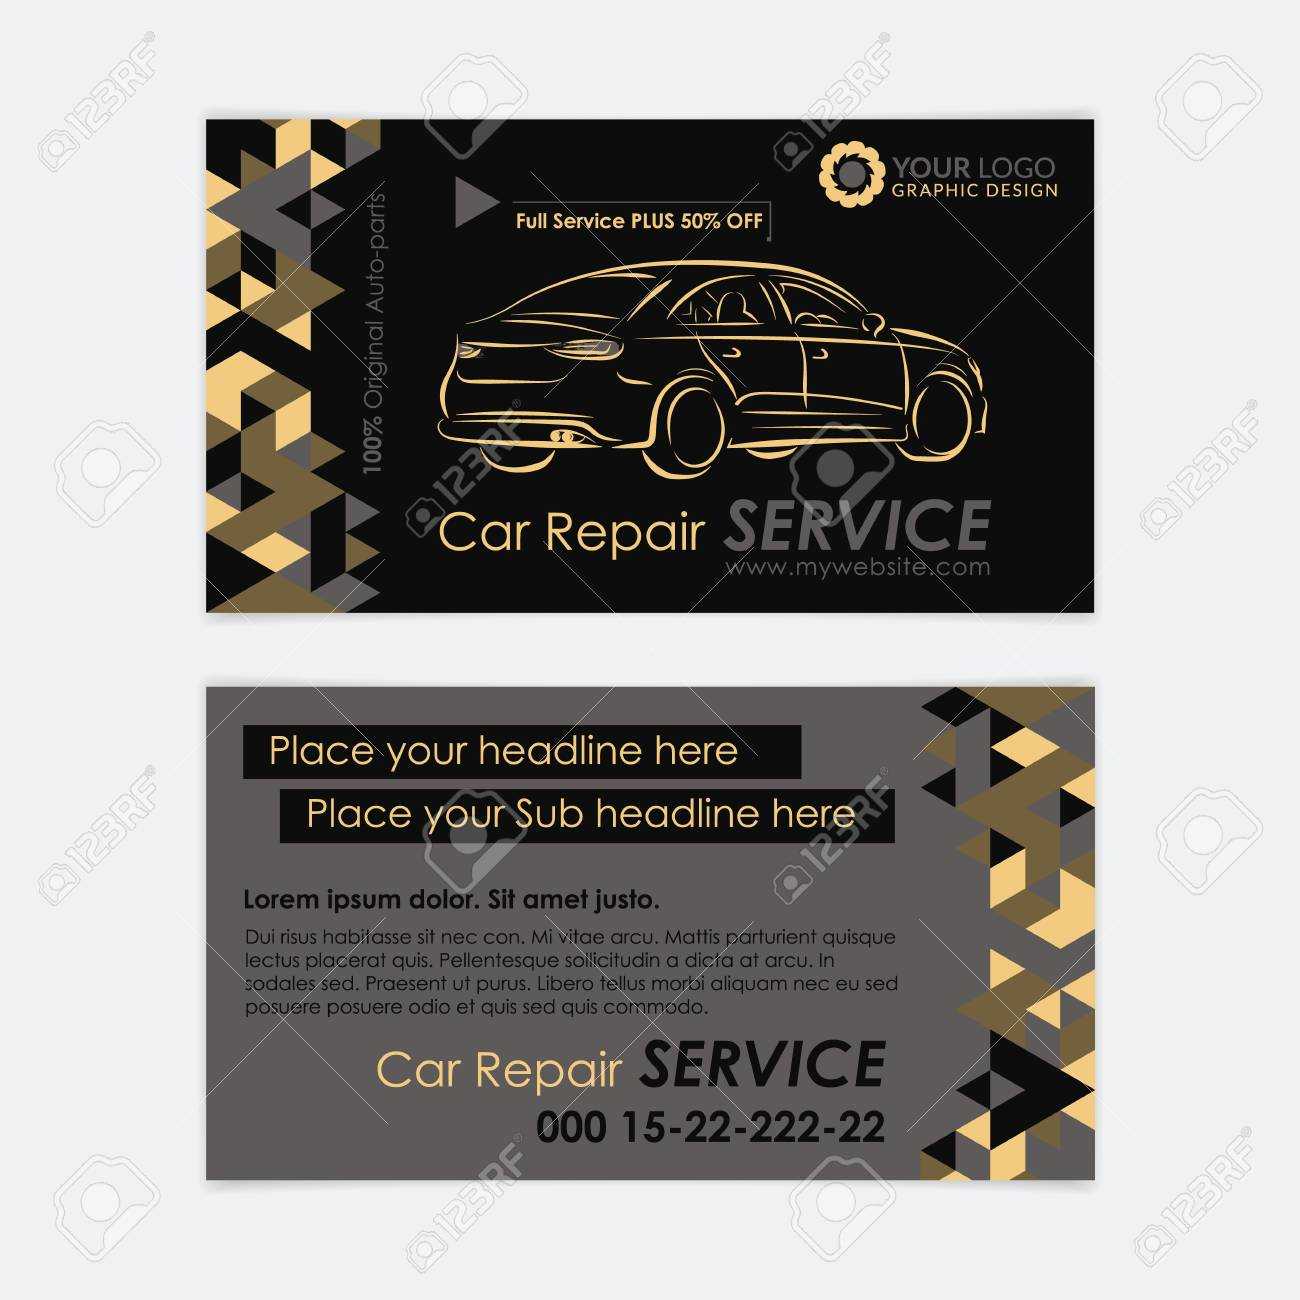 Automotive Service Business Card Template. Car Diagnostics And.. With Regard To Automotive Business Card Templates